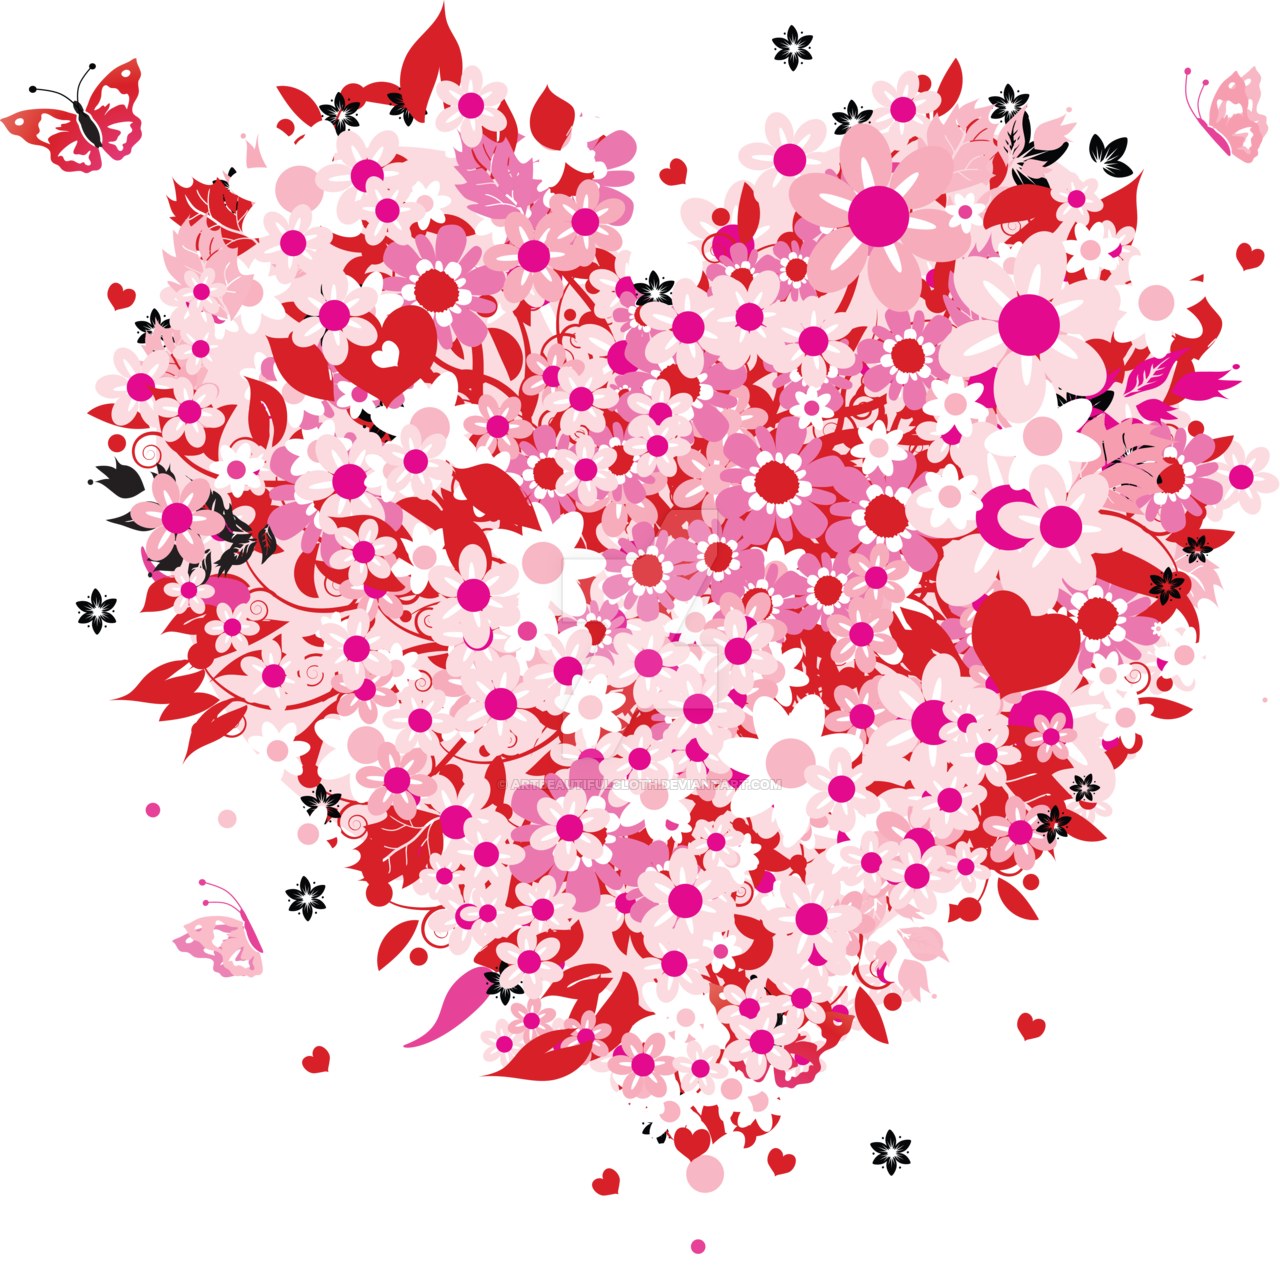 Panda clipart pattern. Pink heart design royalty